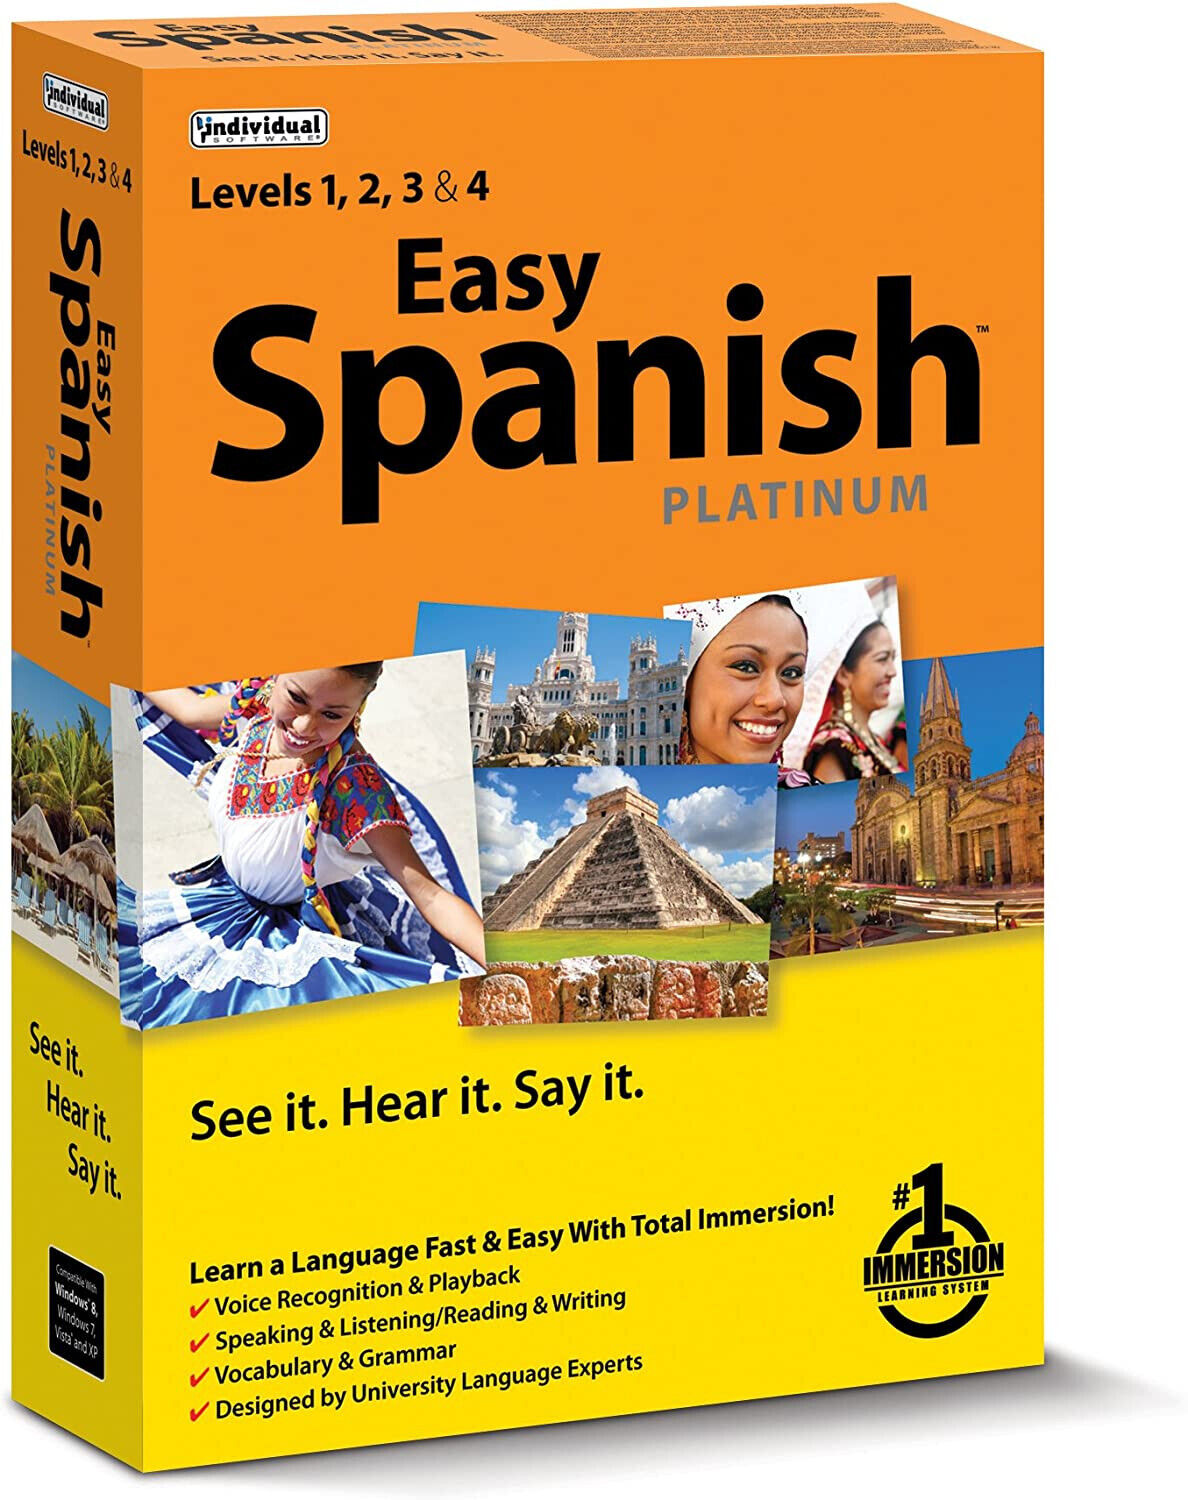 Easy Spanish Platinum levels 1-4 for PC NEW